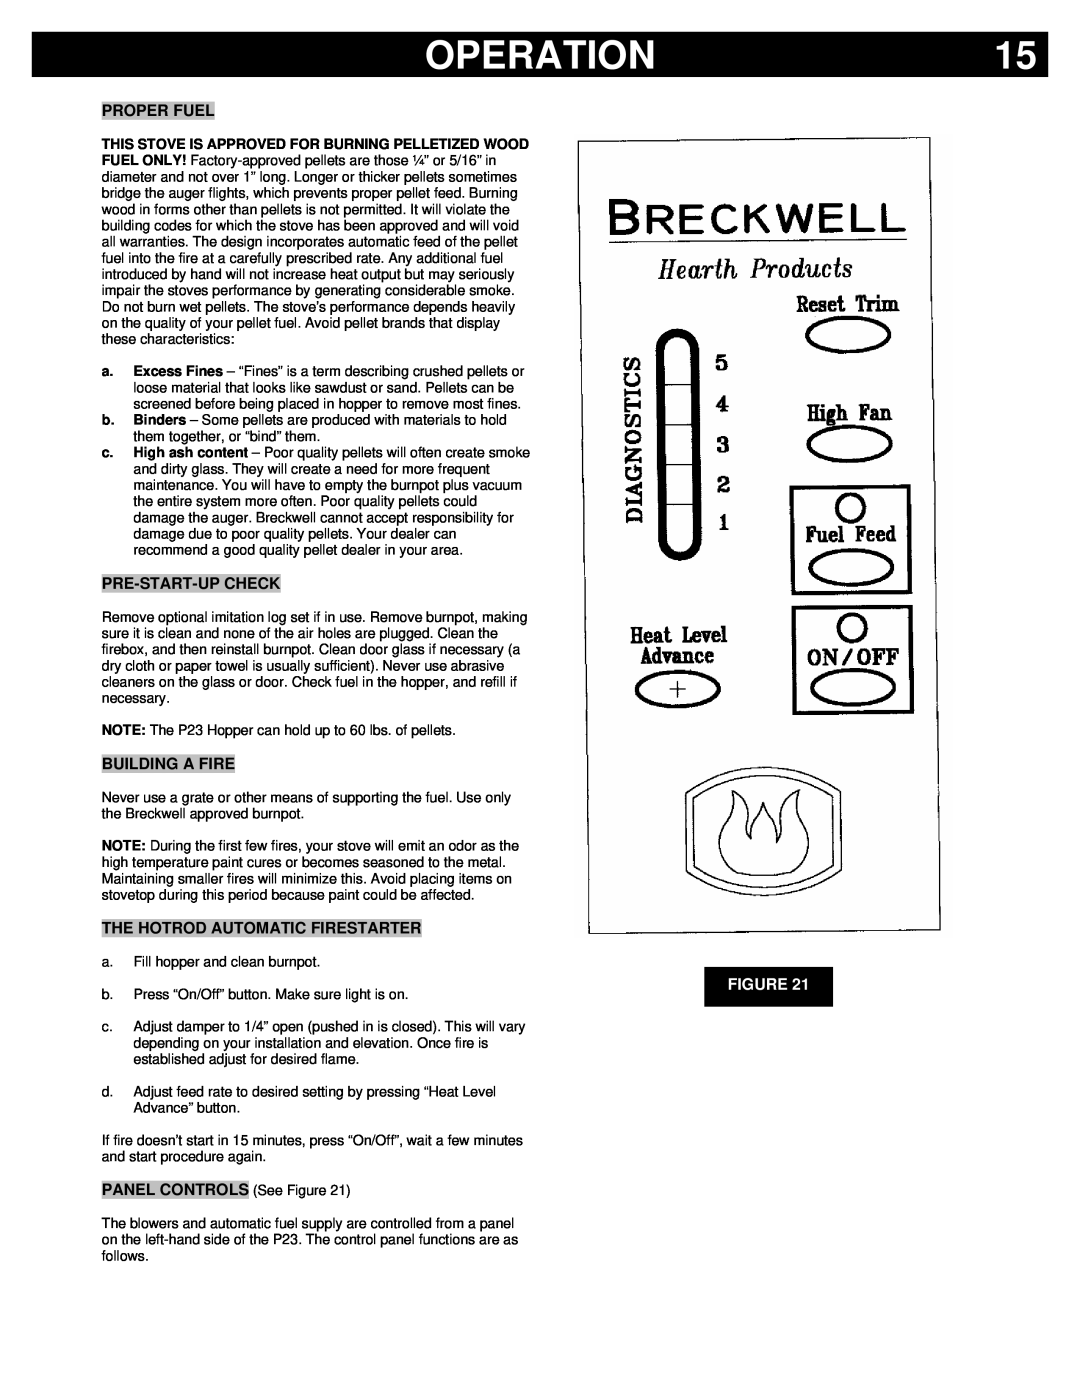 Breckwell P23I, P23FSA, P23FSL Operation, Proper Fuel, Pre-Start-Upcheck, Building A Fire, The Hotrod Automatic Firestarter 